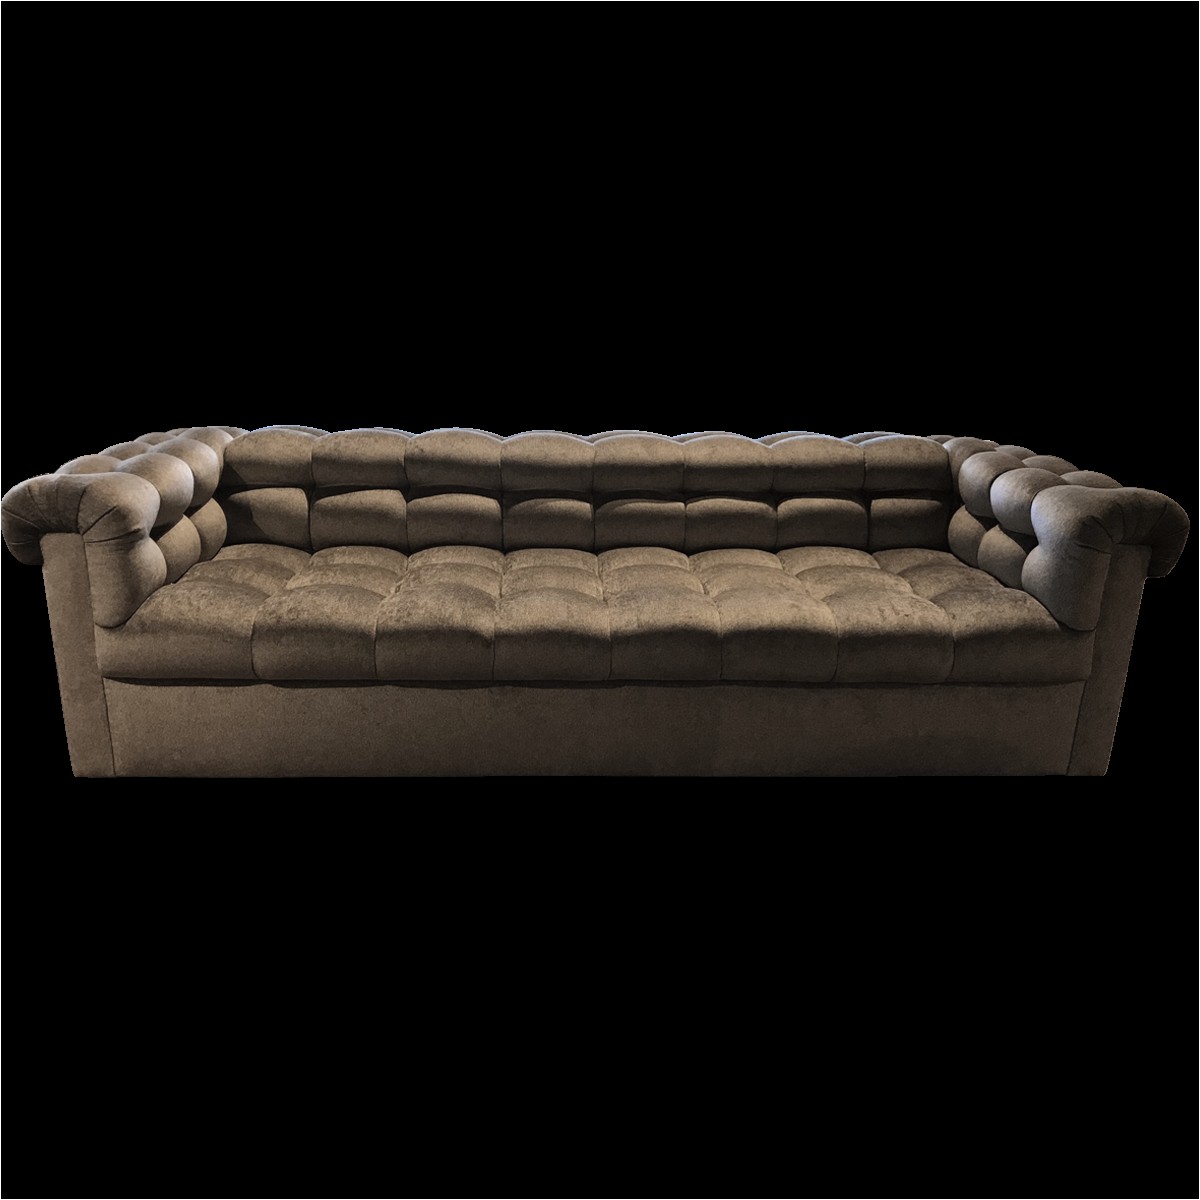 A Rudin sofa 2736 Viyet Designer Furniture Seating A Rudin 2736 Chesterfield